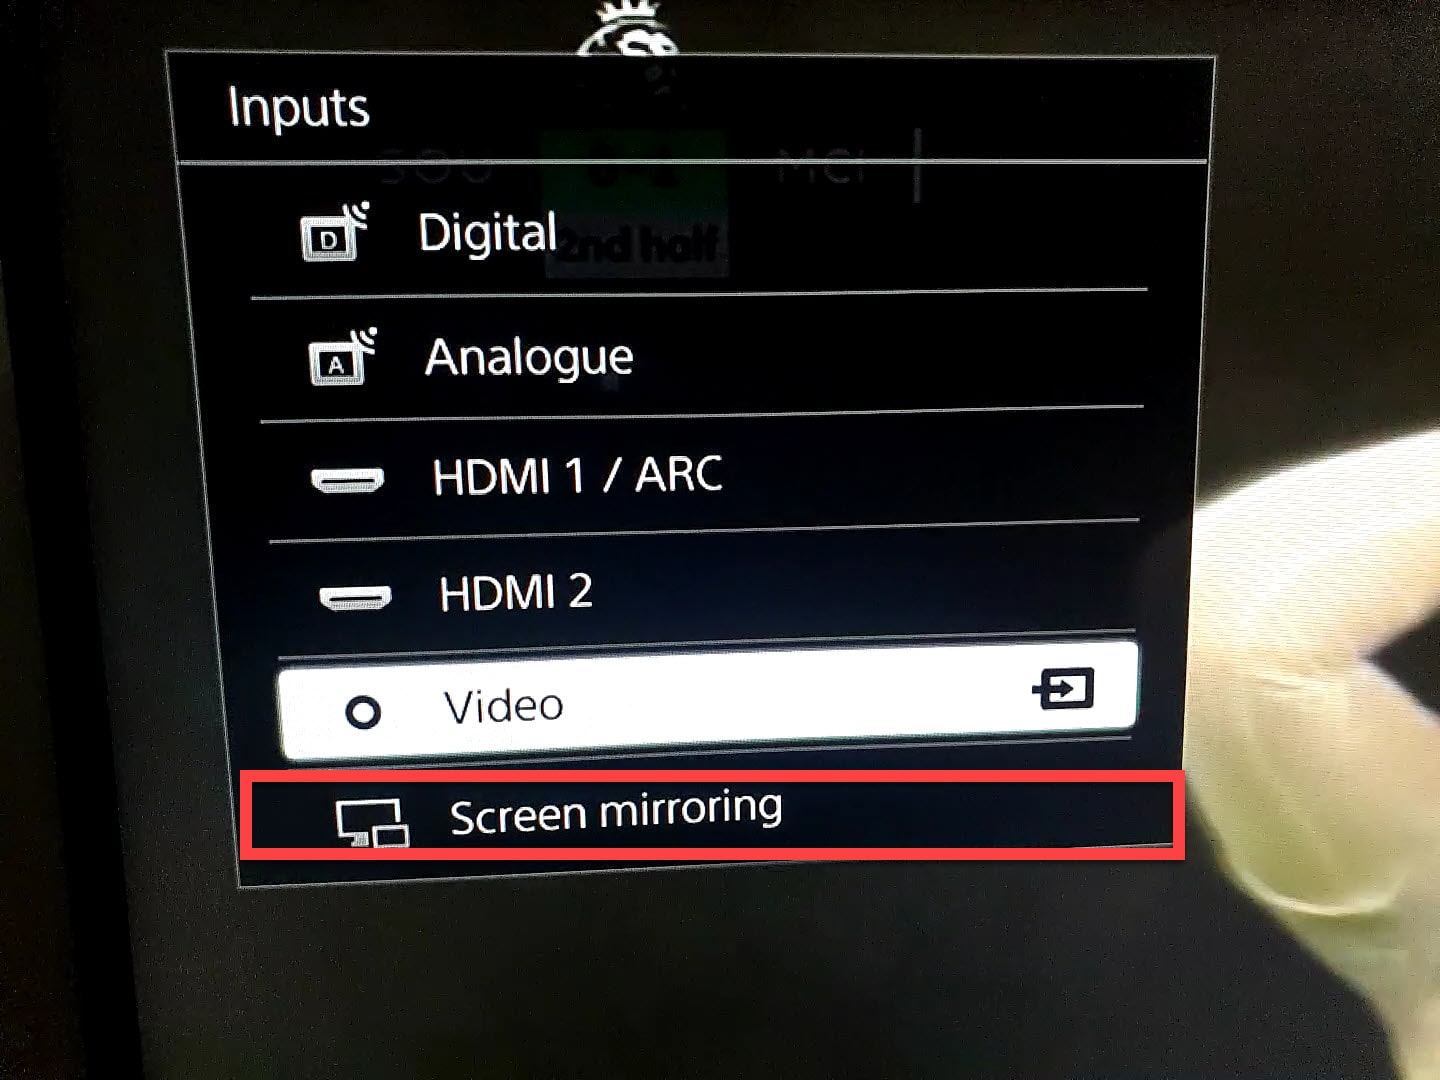 reflector mac to fire tv